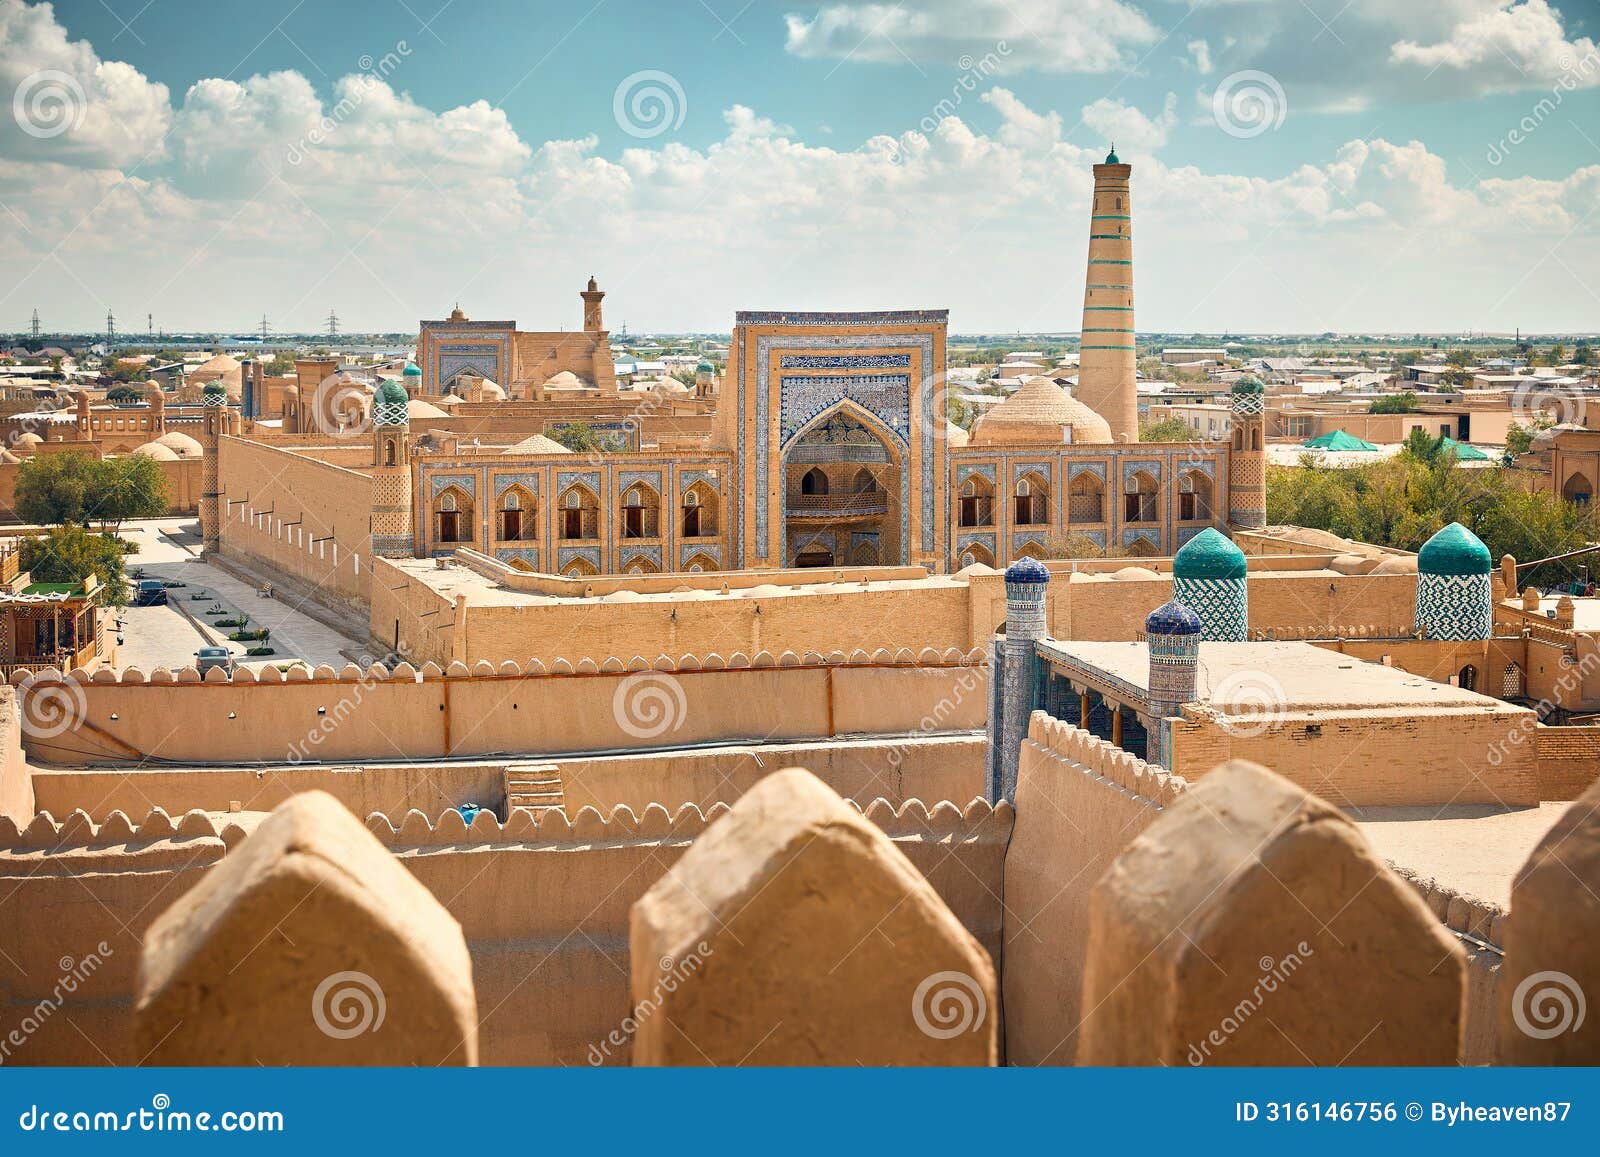 madrasah and kalta minor minaret in ancient city at khiva in uzbekistan